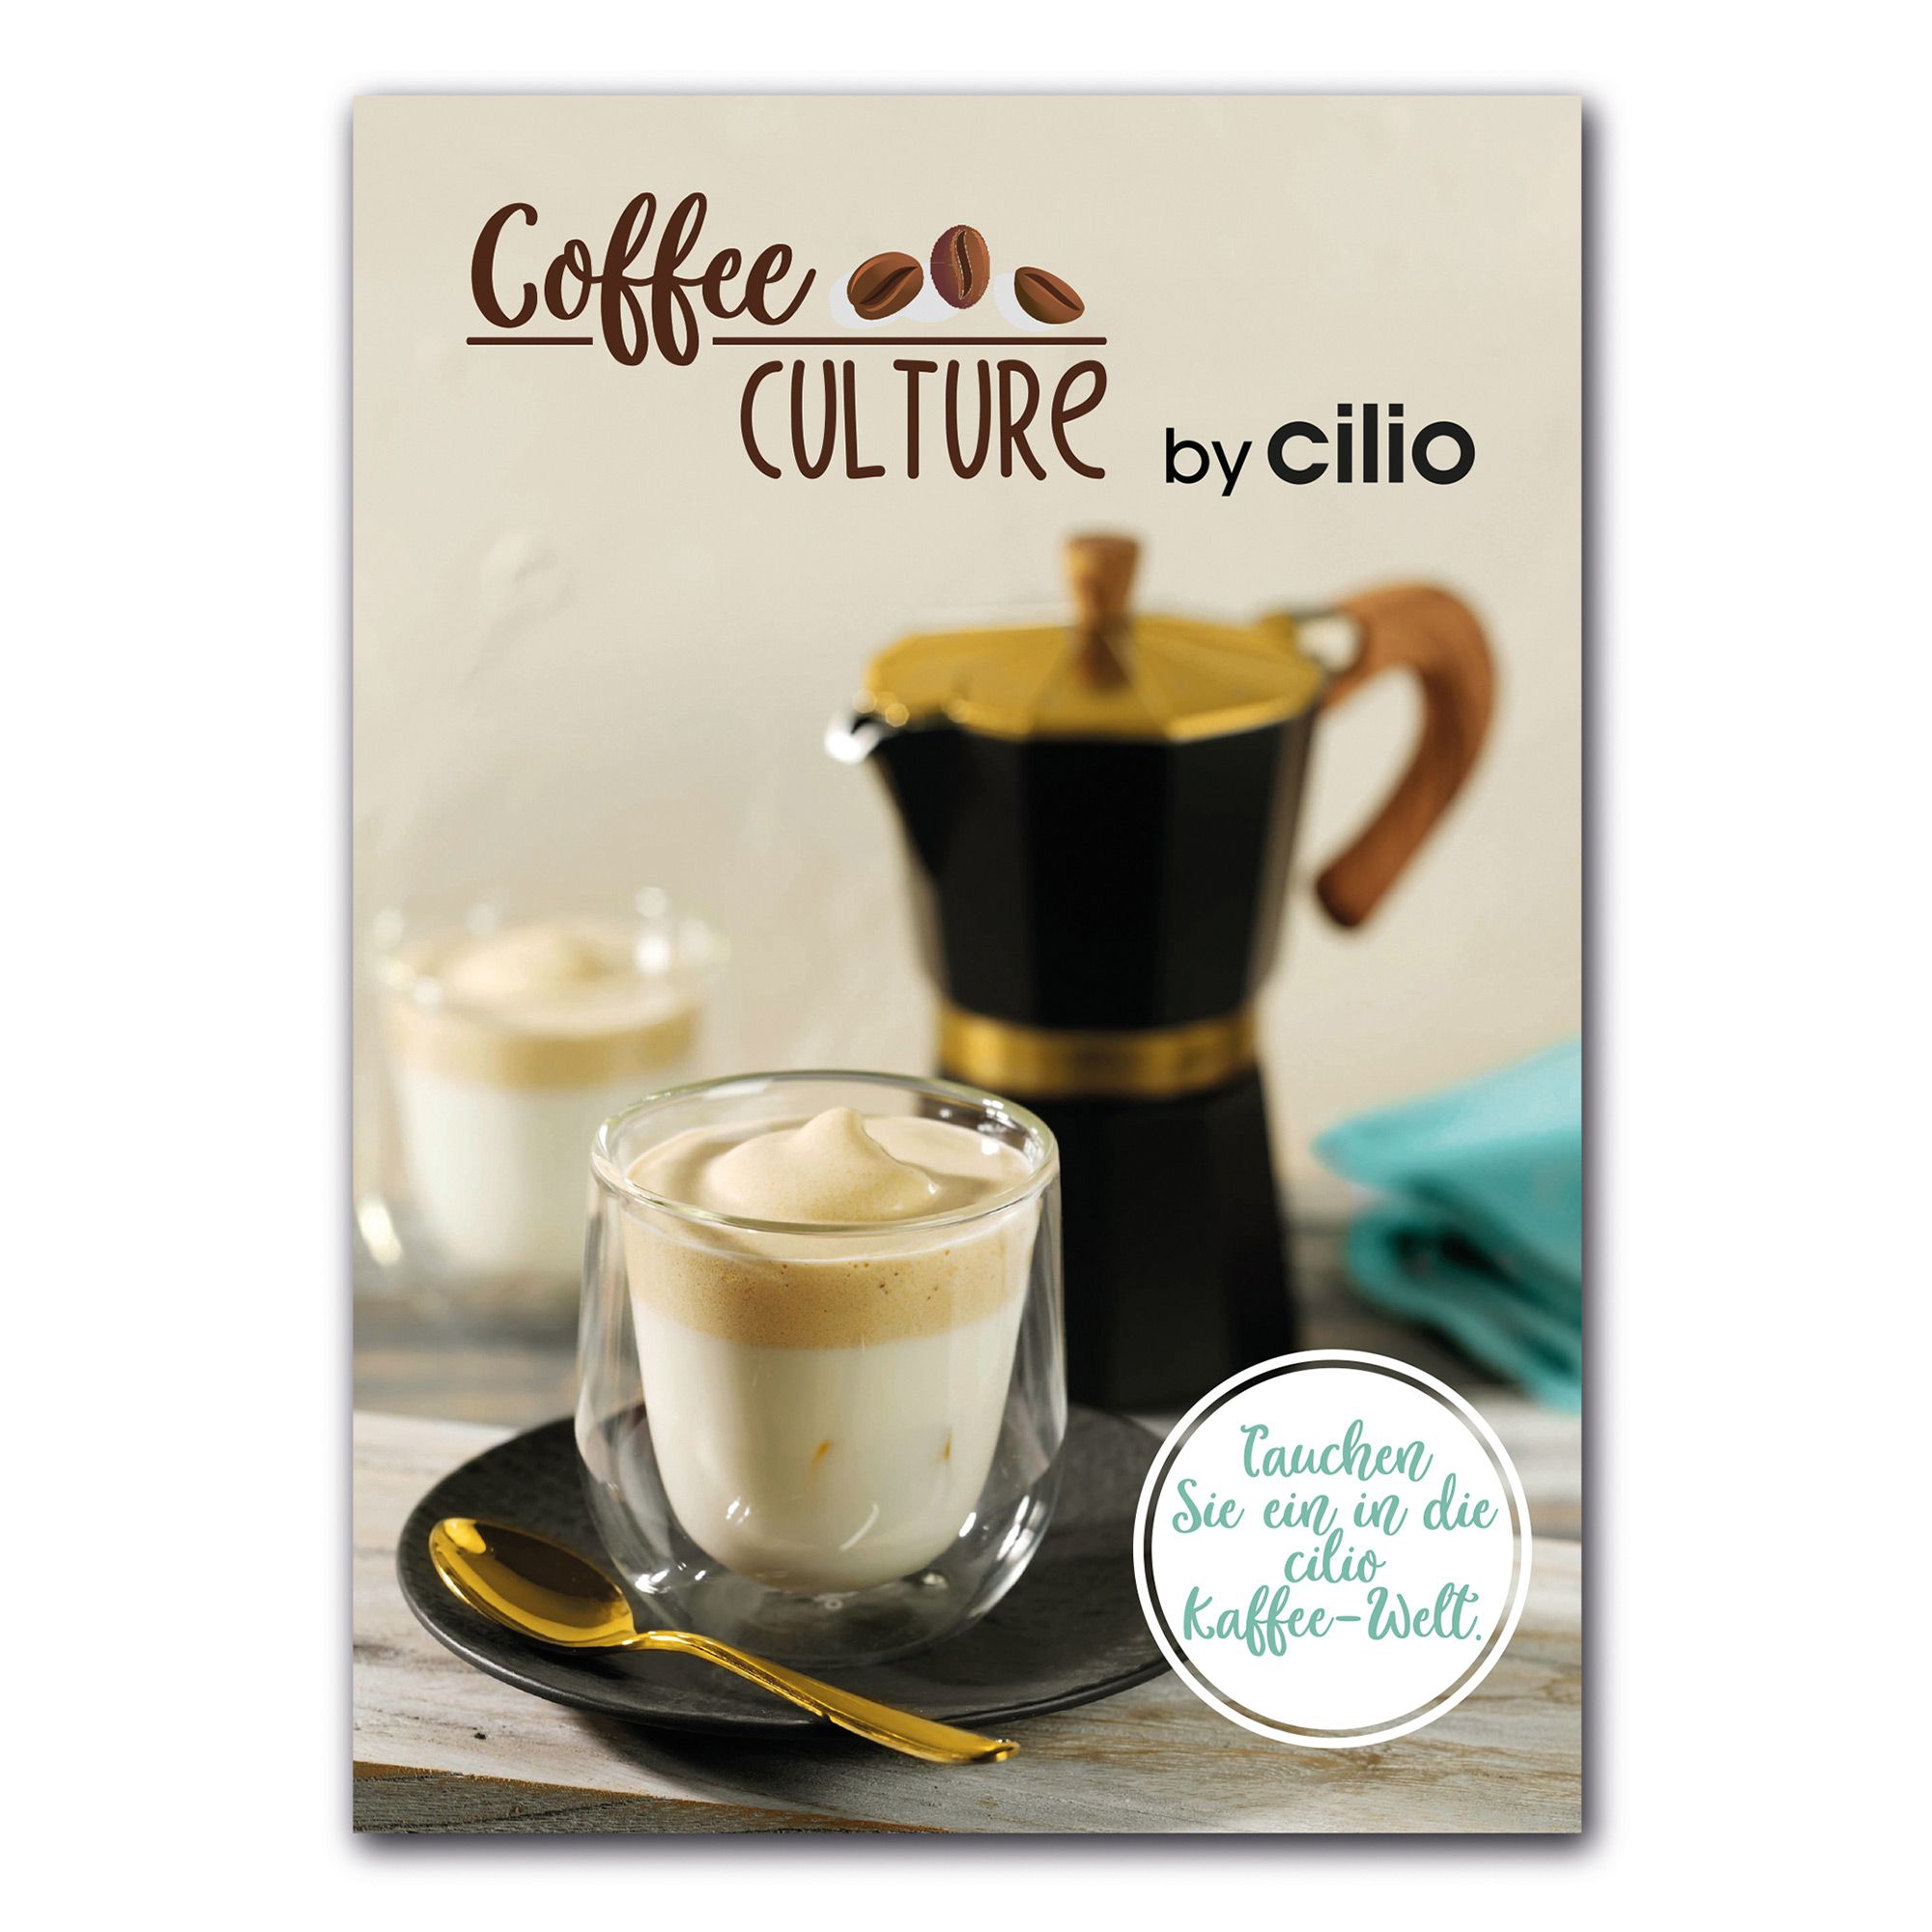 Cilio - Coffee CULTURE by Cilio - 28 kreative Rezepte